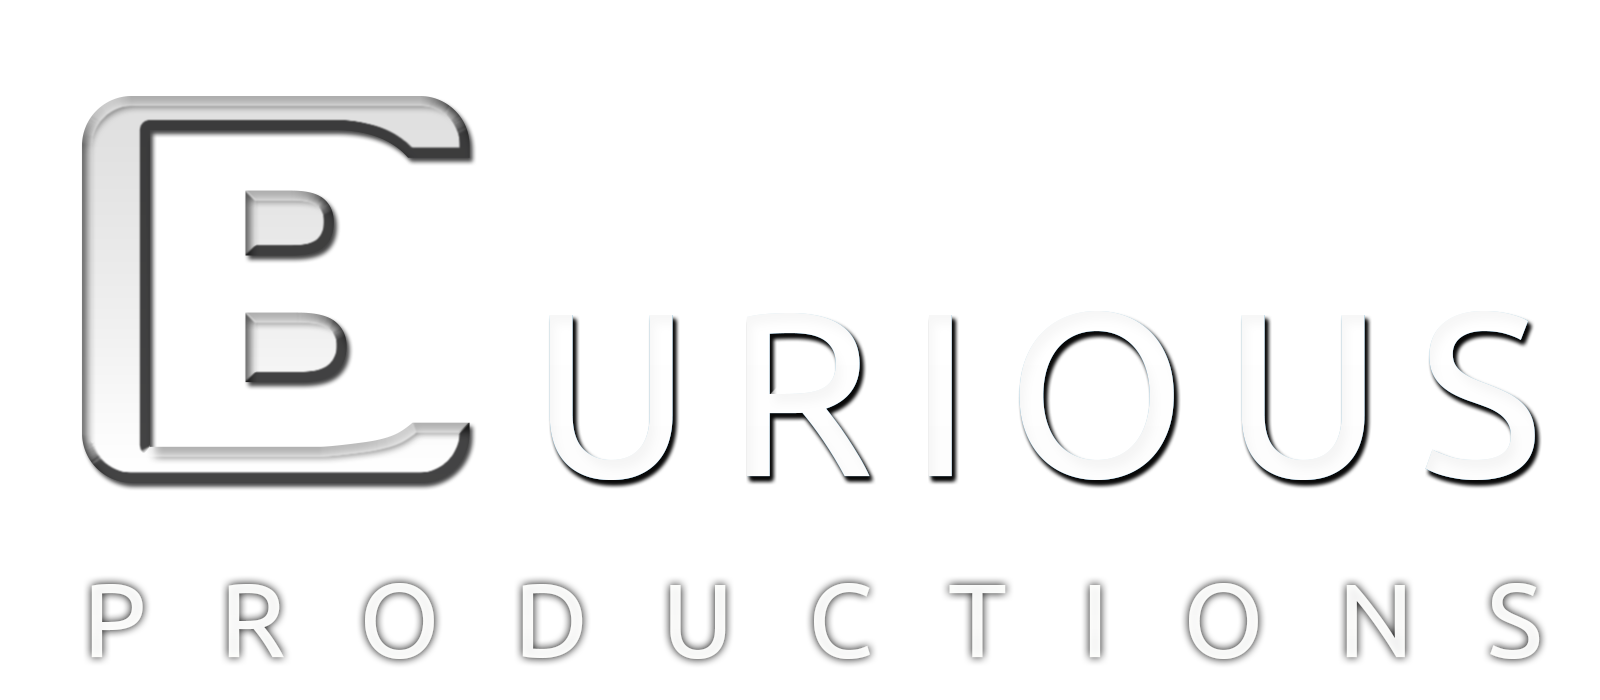 BCurious Productions